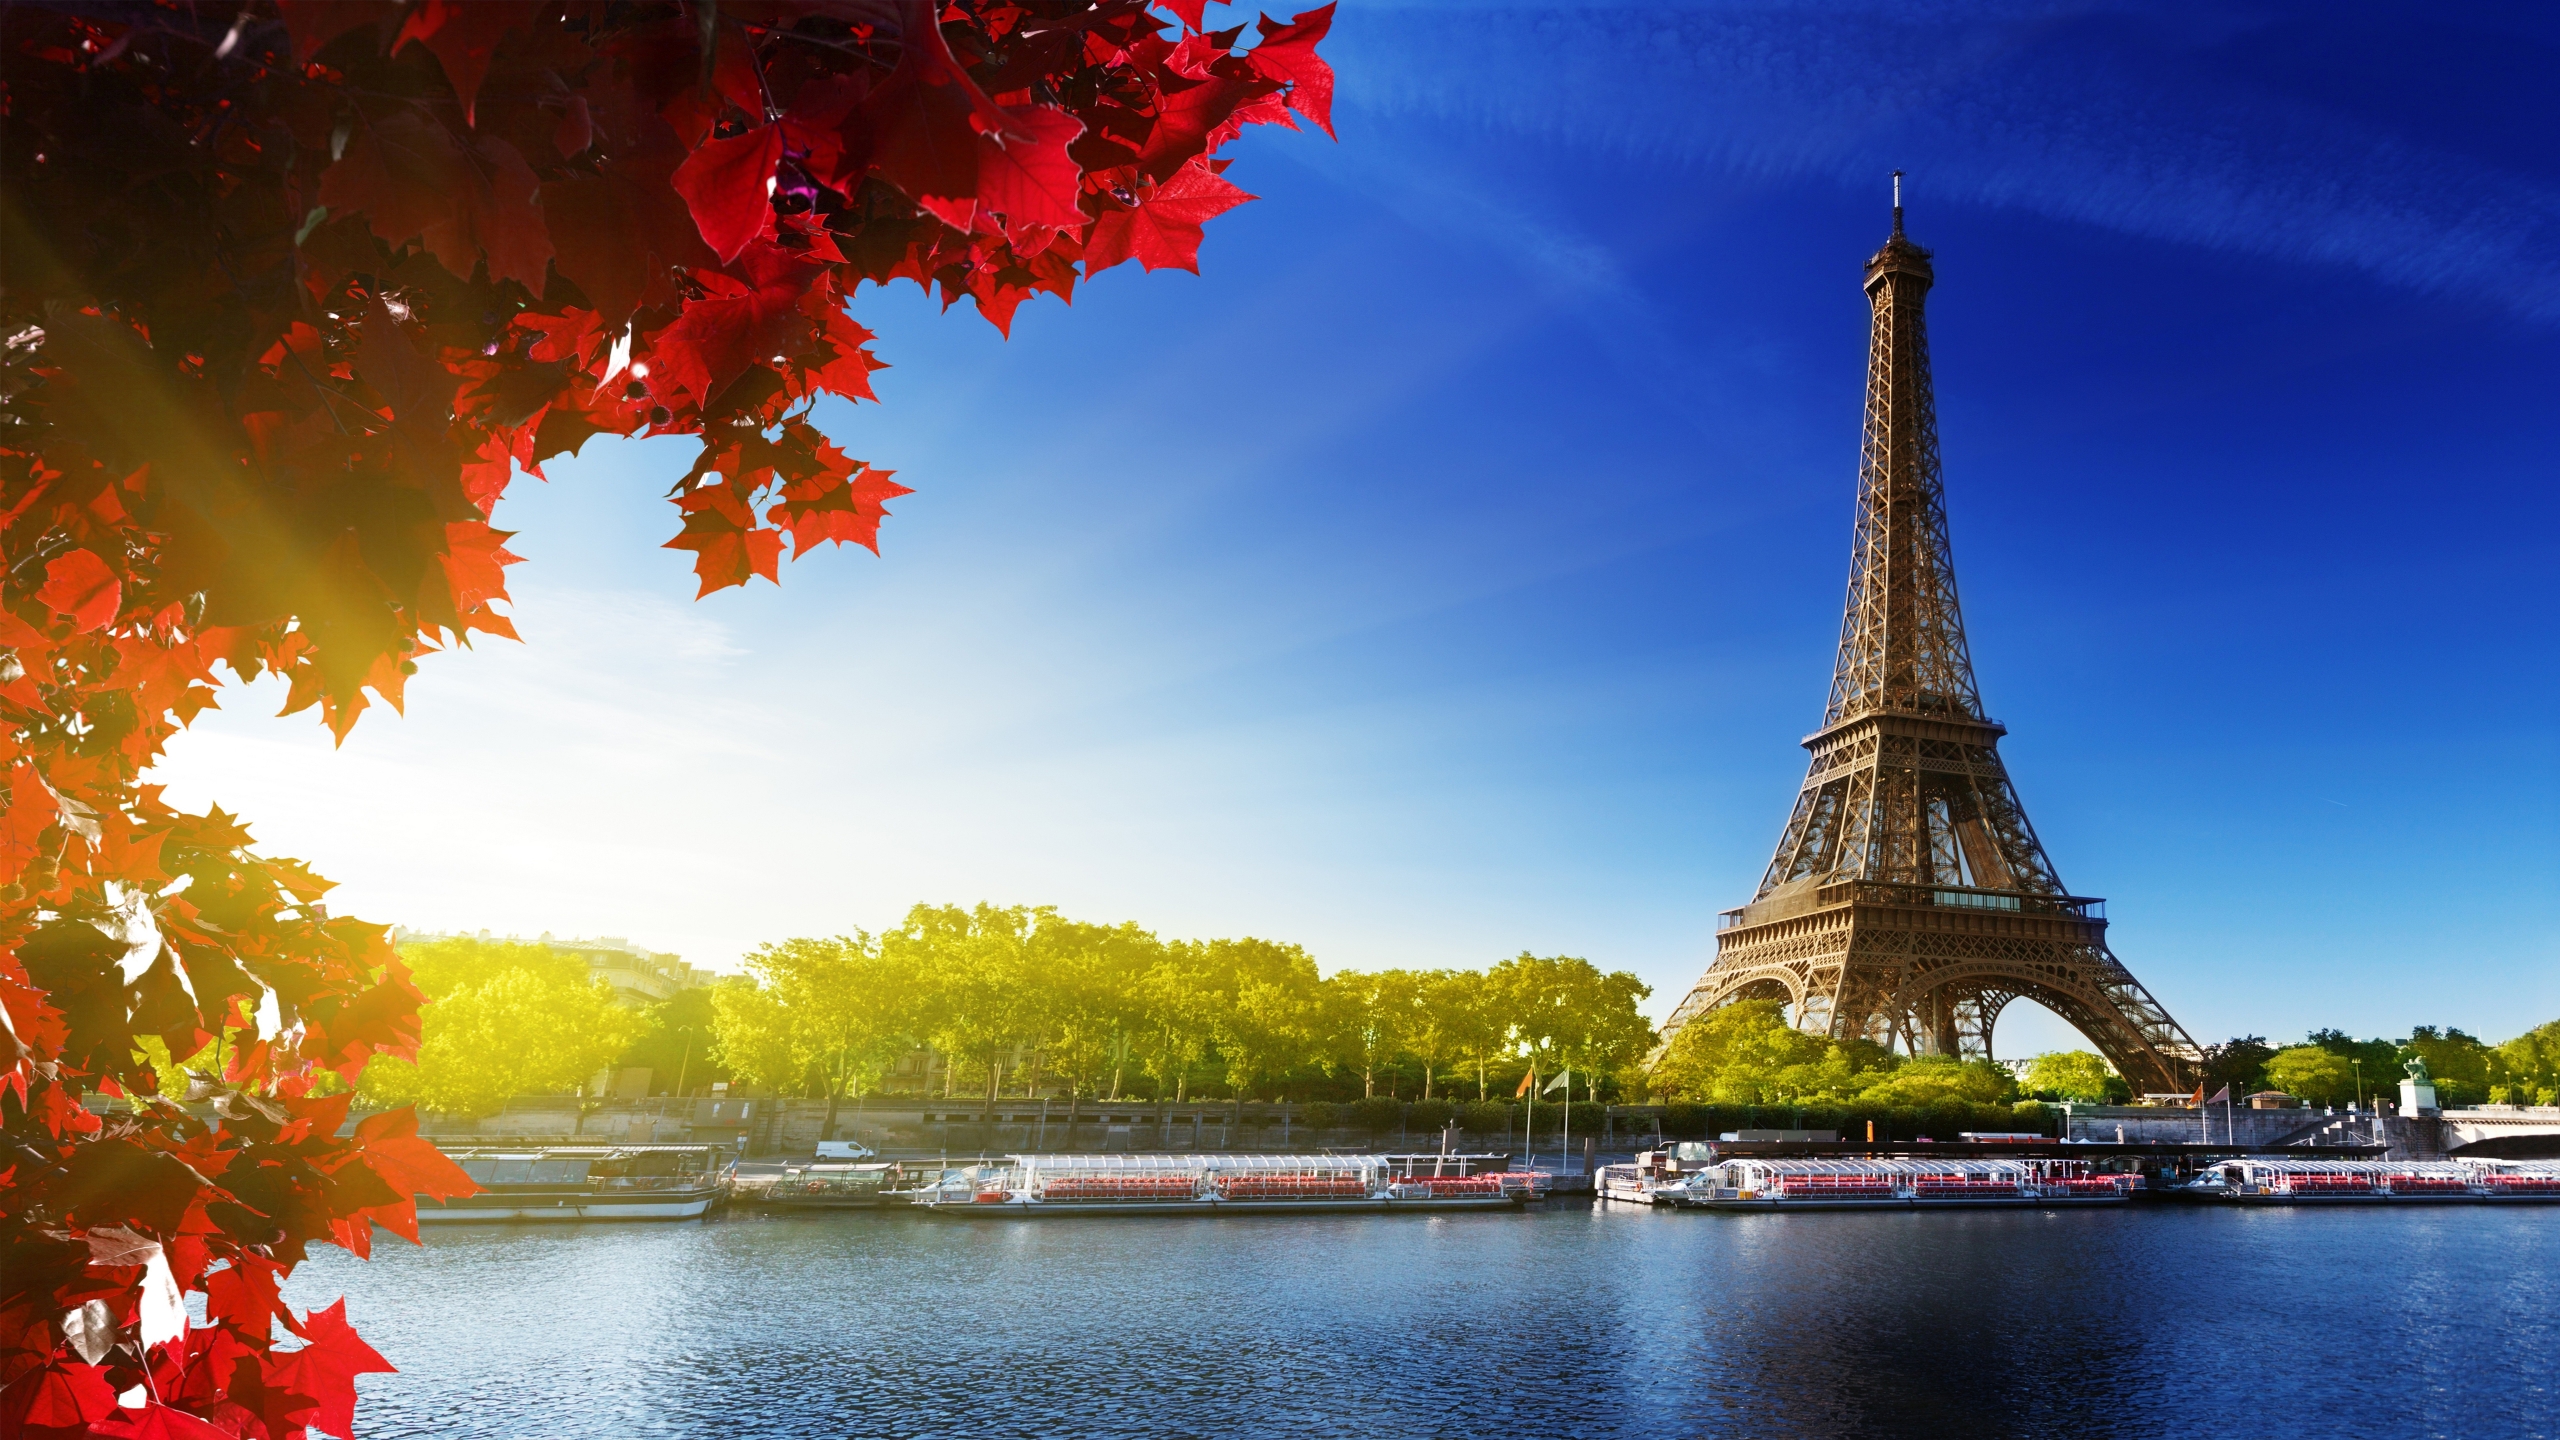 Eiffel Tower Paris for 2560 x 1440 HDTV resolution